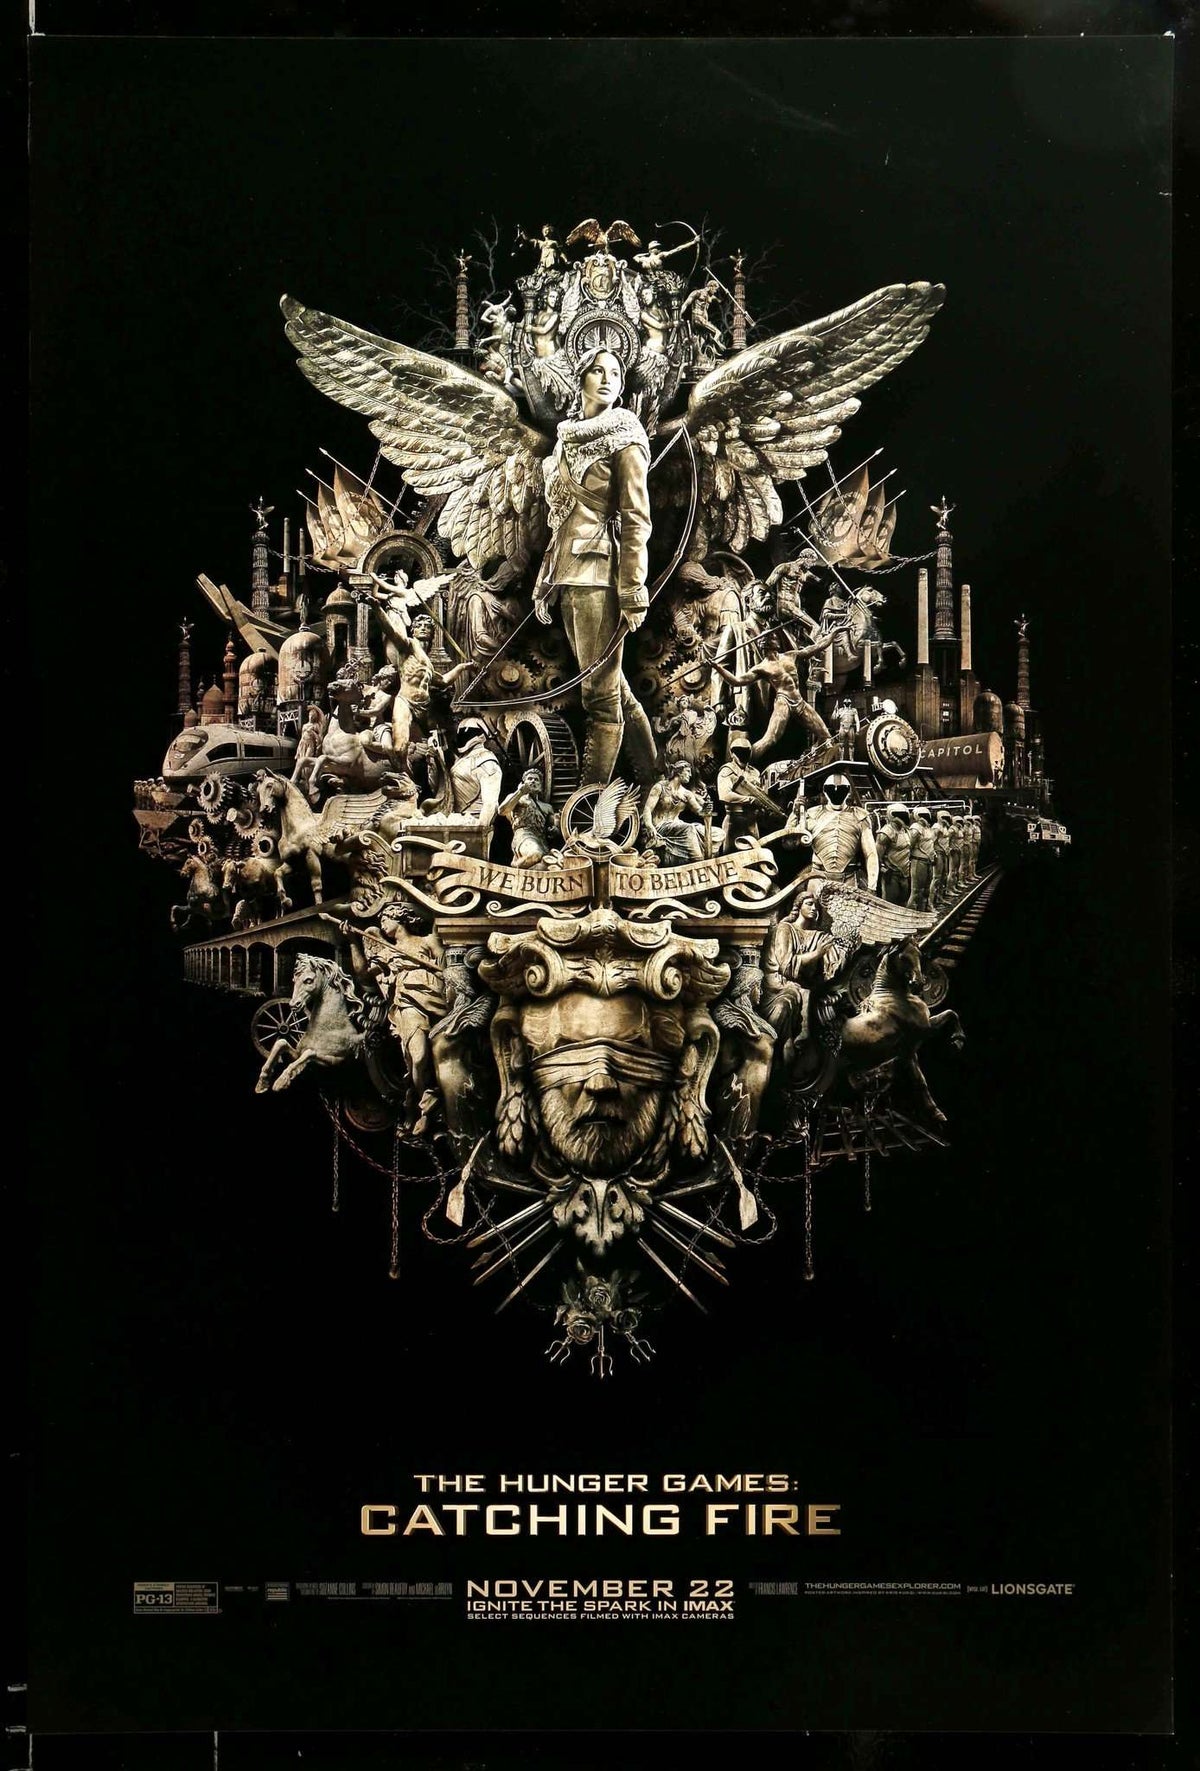 Hunger Games: Catching Fire (2013) original movie poster for sale at Original Film Art